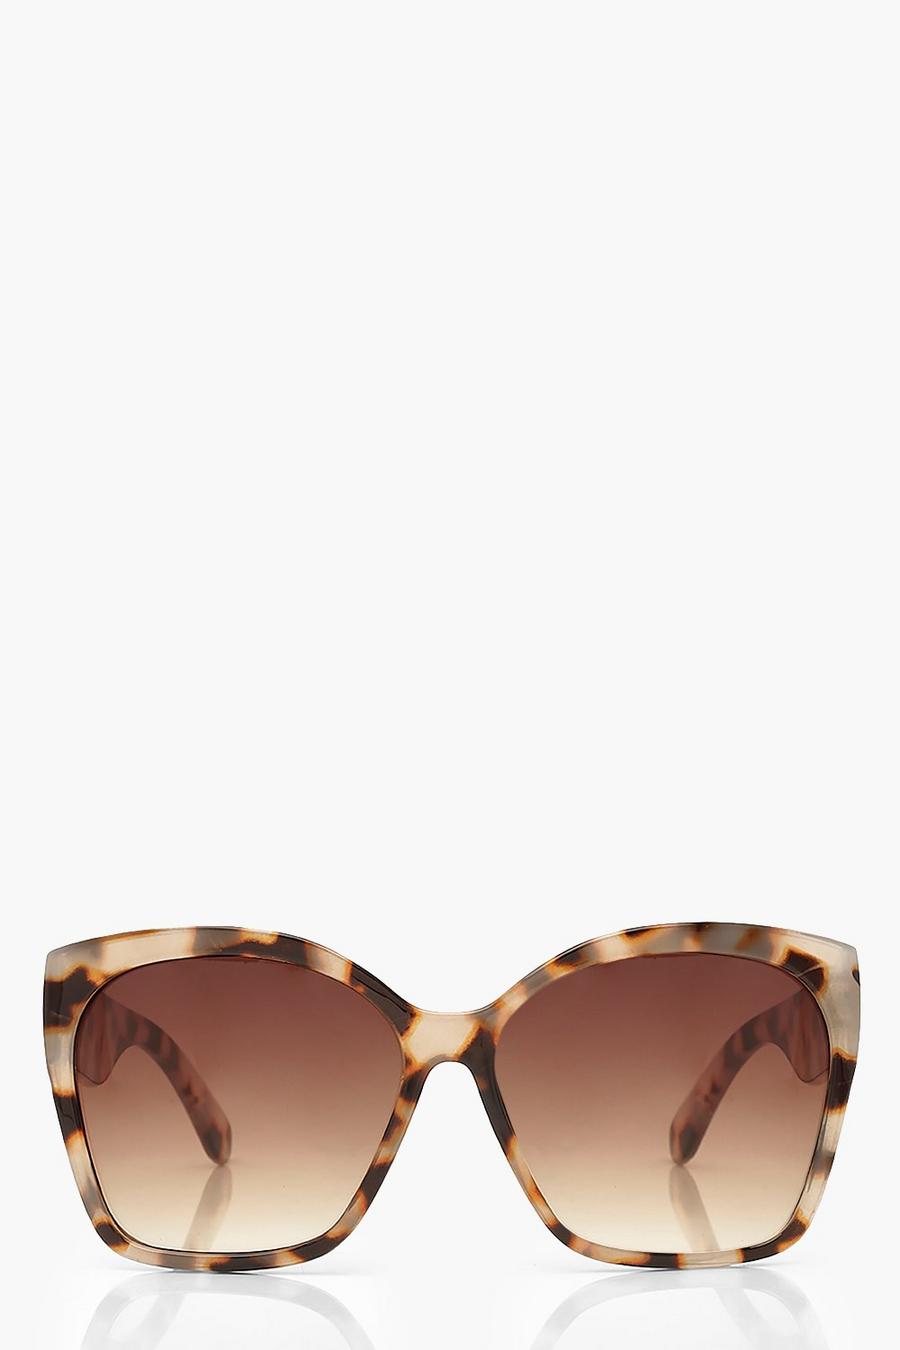 Cream bianco Oversized Tortoise Shell Sunglasses